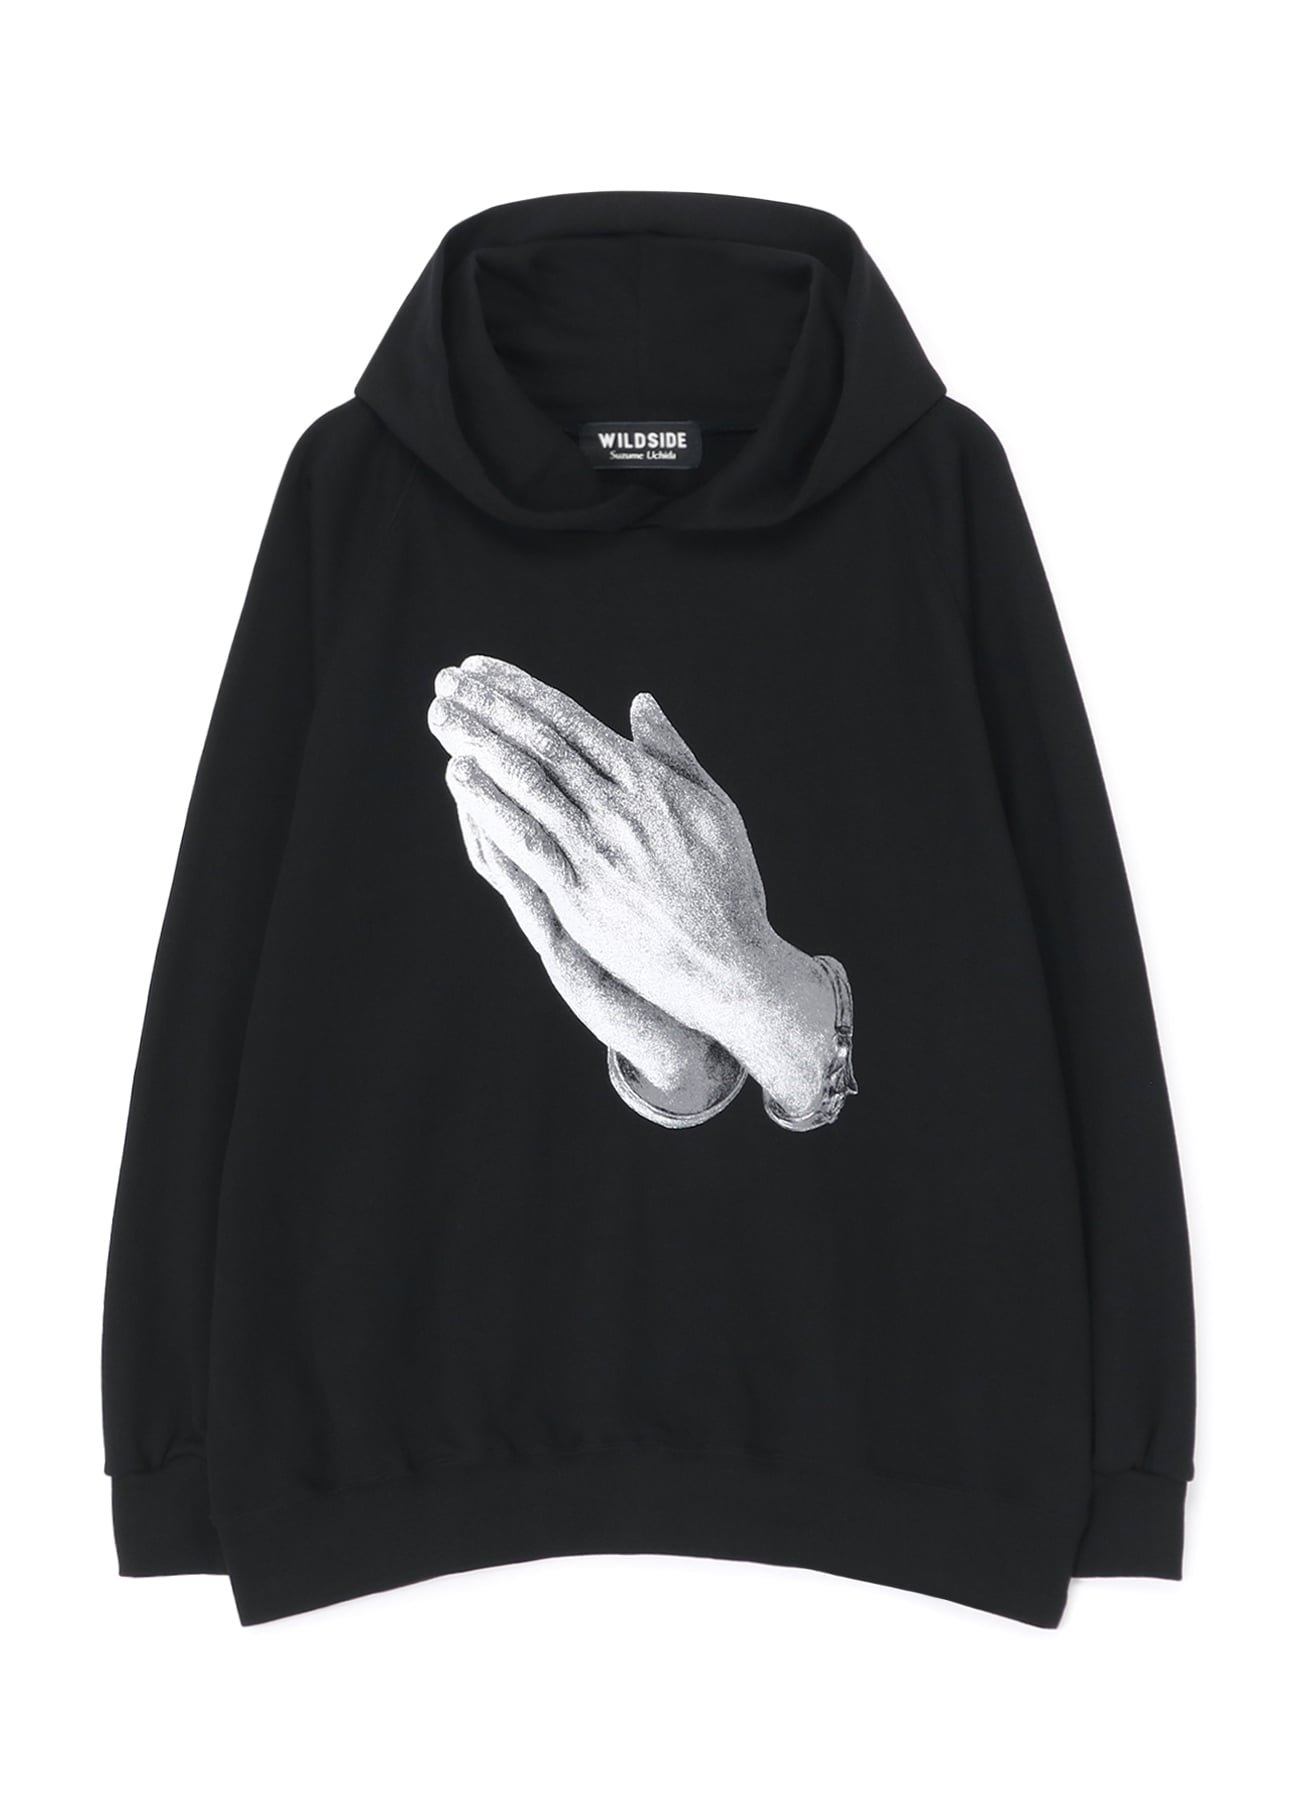 "Praying Hands" Hoodie